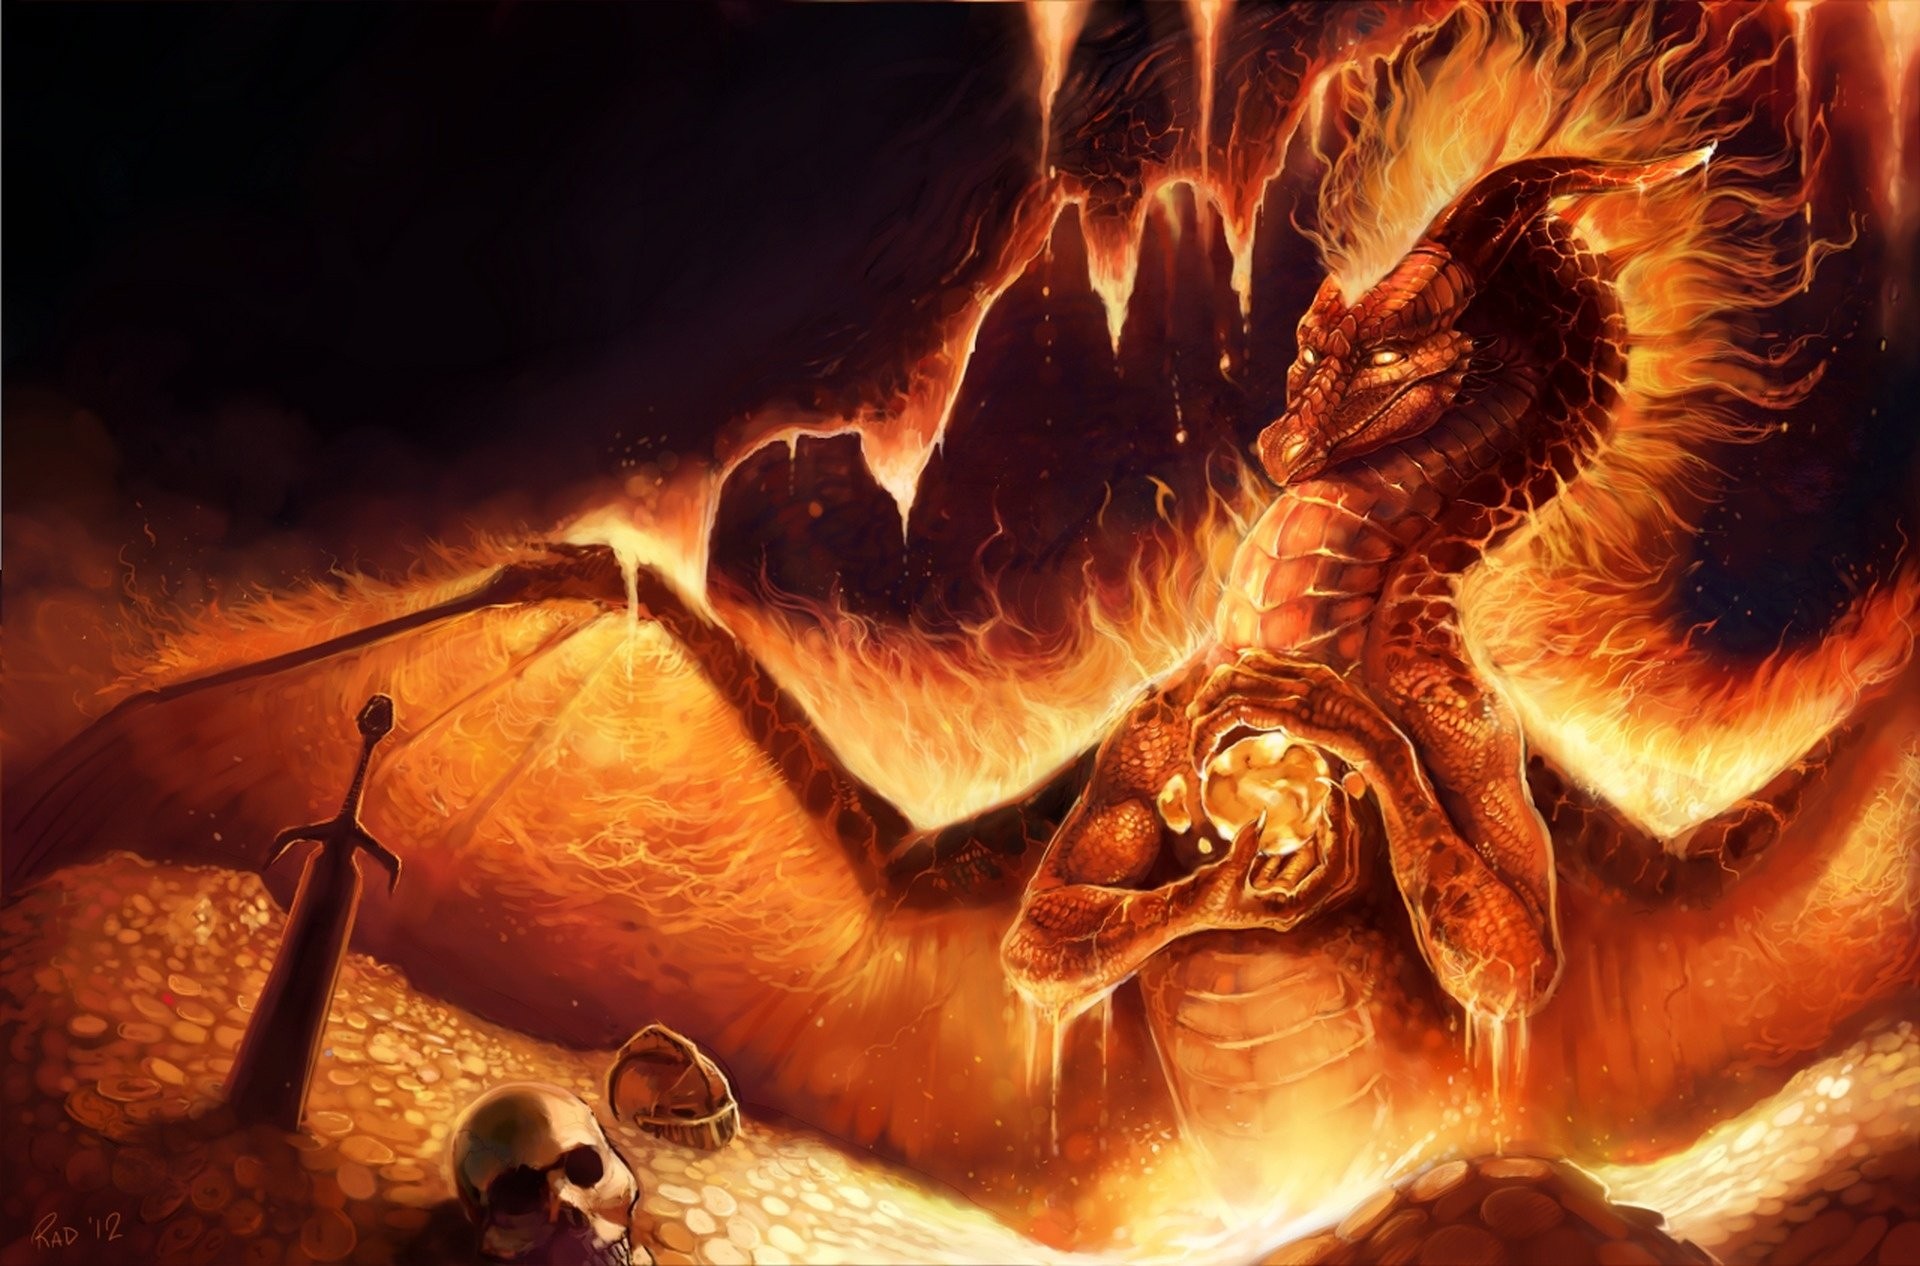 1920x1266 dragon wallpaper free download; dragon skull gold fire swords fantasy  wallpaper  ...